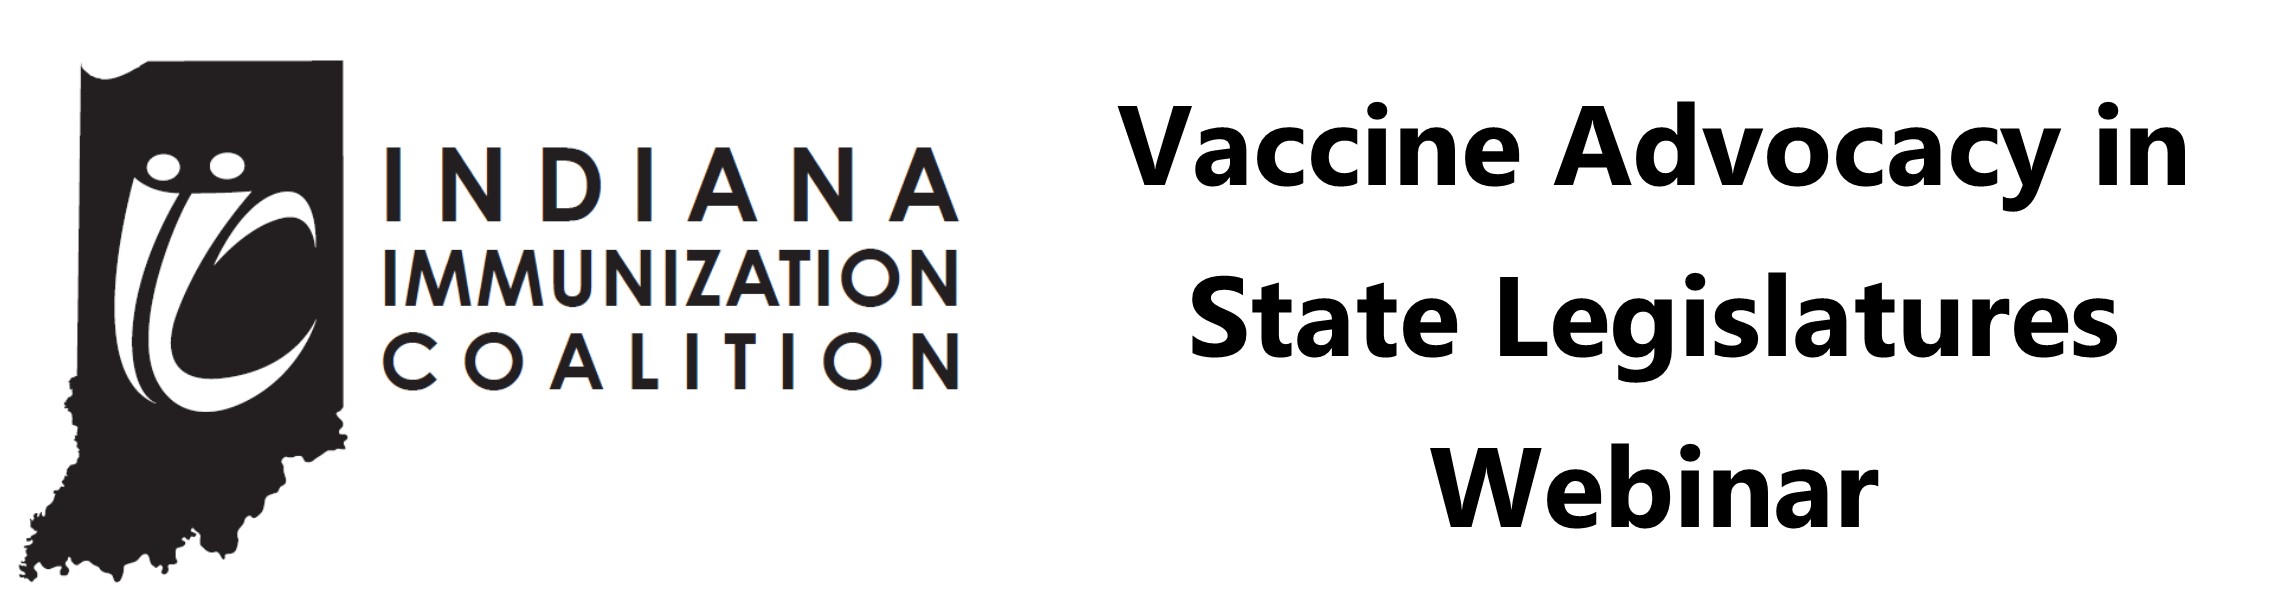 Vaccine Advocacy in State Legislatures Webinar Banner